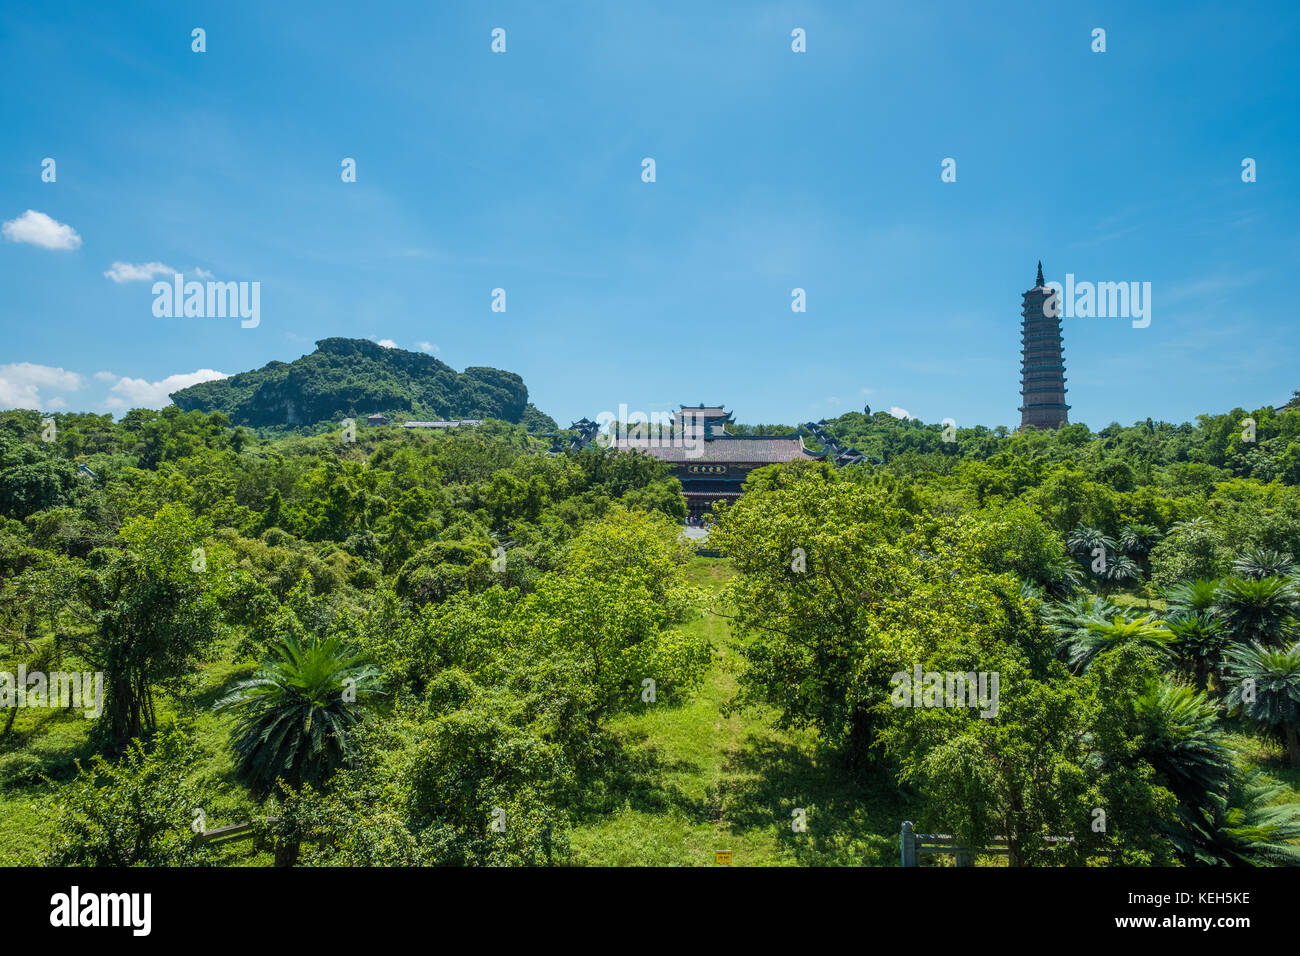 Sep 18, 2017 Inside of center tower view in Bai Dinh temple, Nin Binh, Vietnam Stock Photo